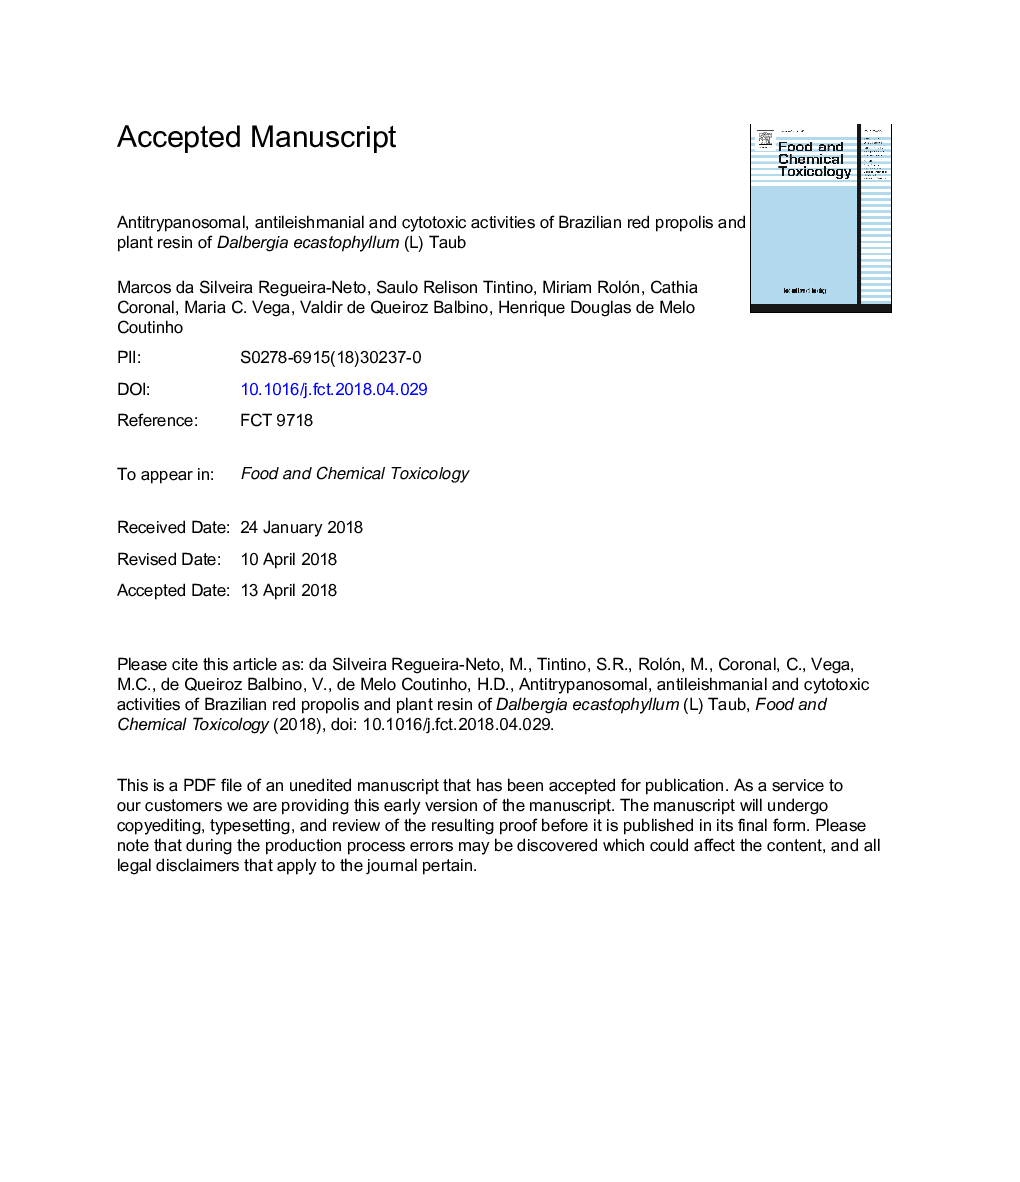 Antitrypanosomal, antileishmanial and cytotoxic activities of Brazilian red propolis and plant resin of Dalbergia ecastaphyllum (L) Taub